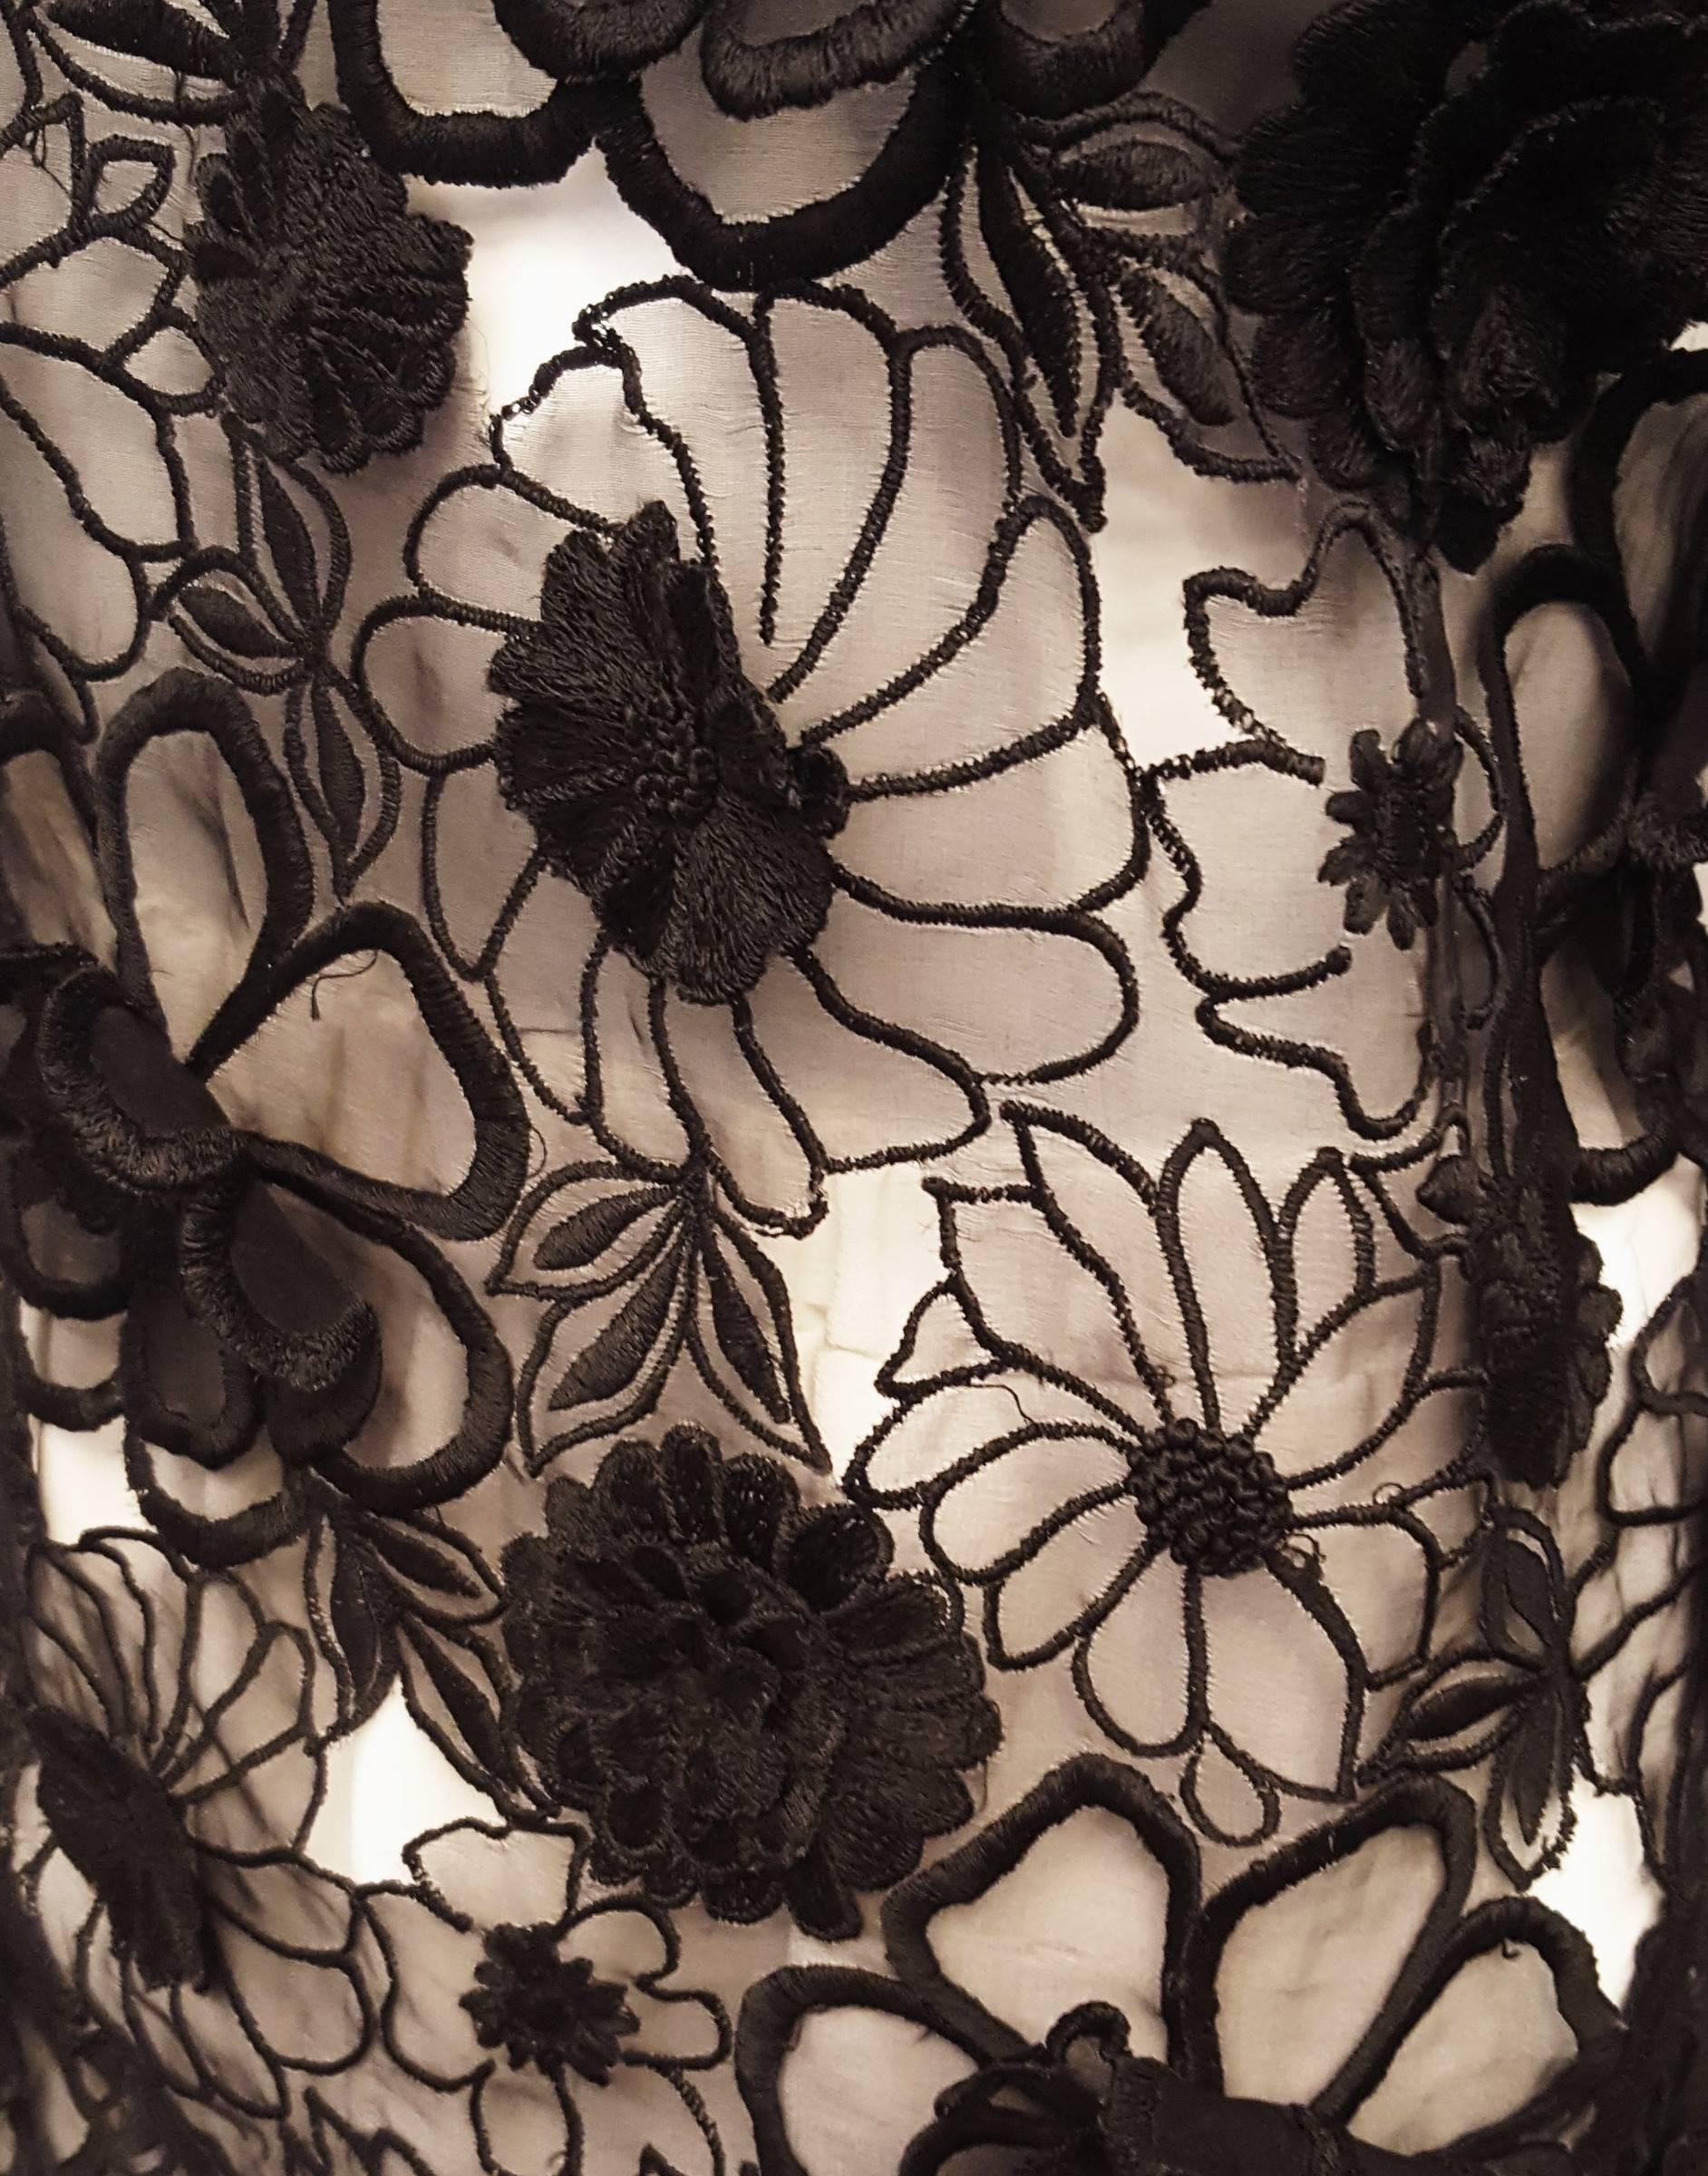 Dries Van Noten Black Floral Applique on Silk with Bateau Neckline Top In Excellent Condition For Sale In Palm Beach, FL